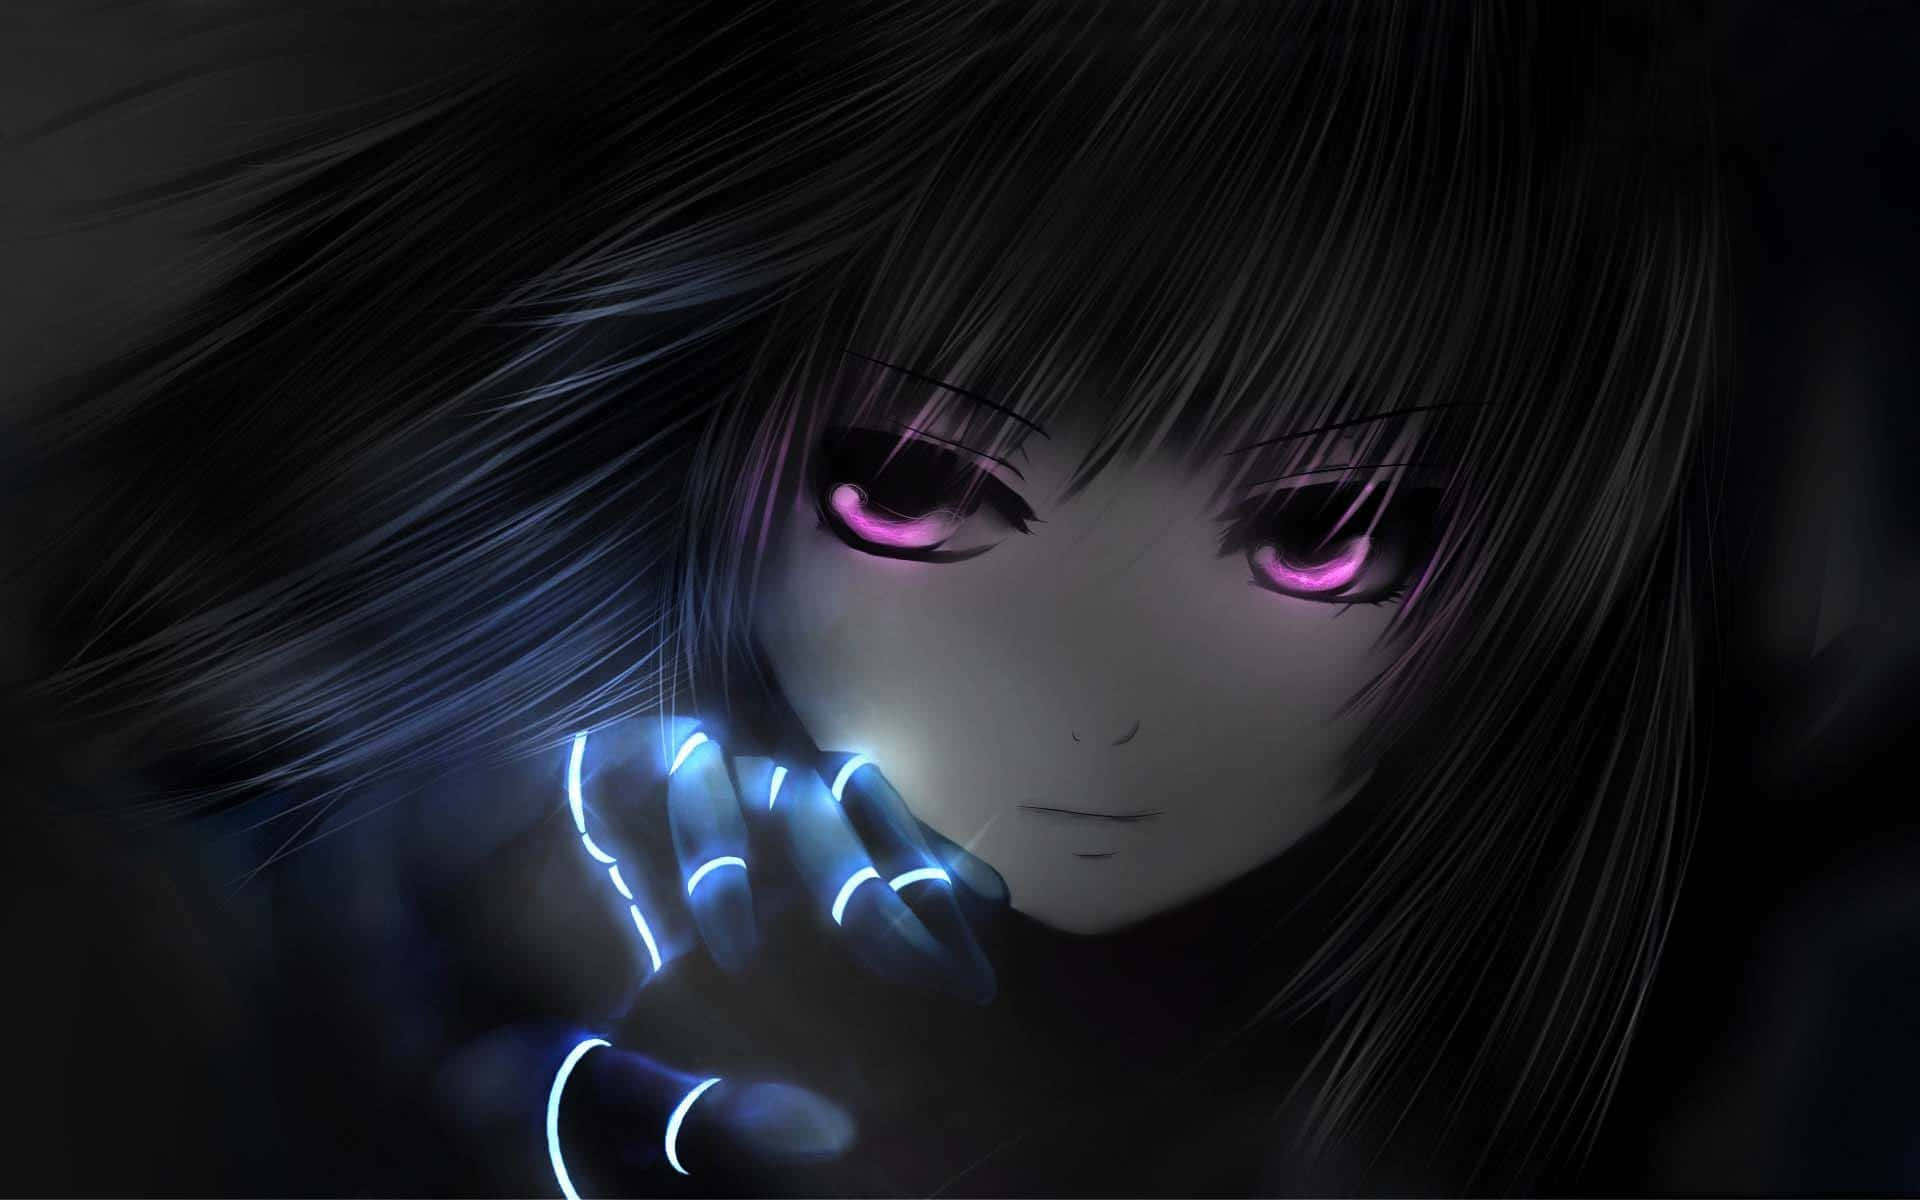 Dark anime girl wallpaper by AbbyyTsumiki - Download on ZEDGE™